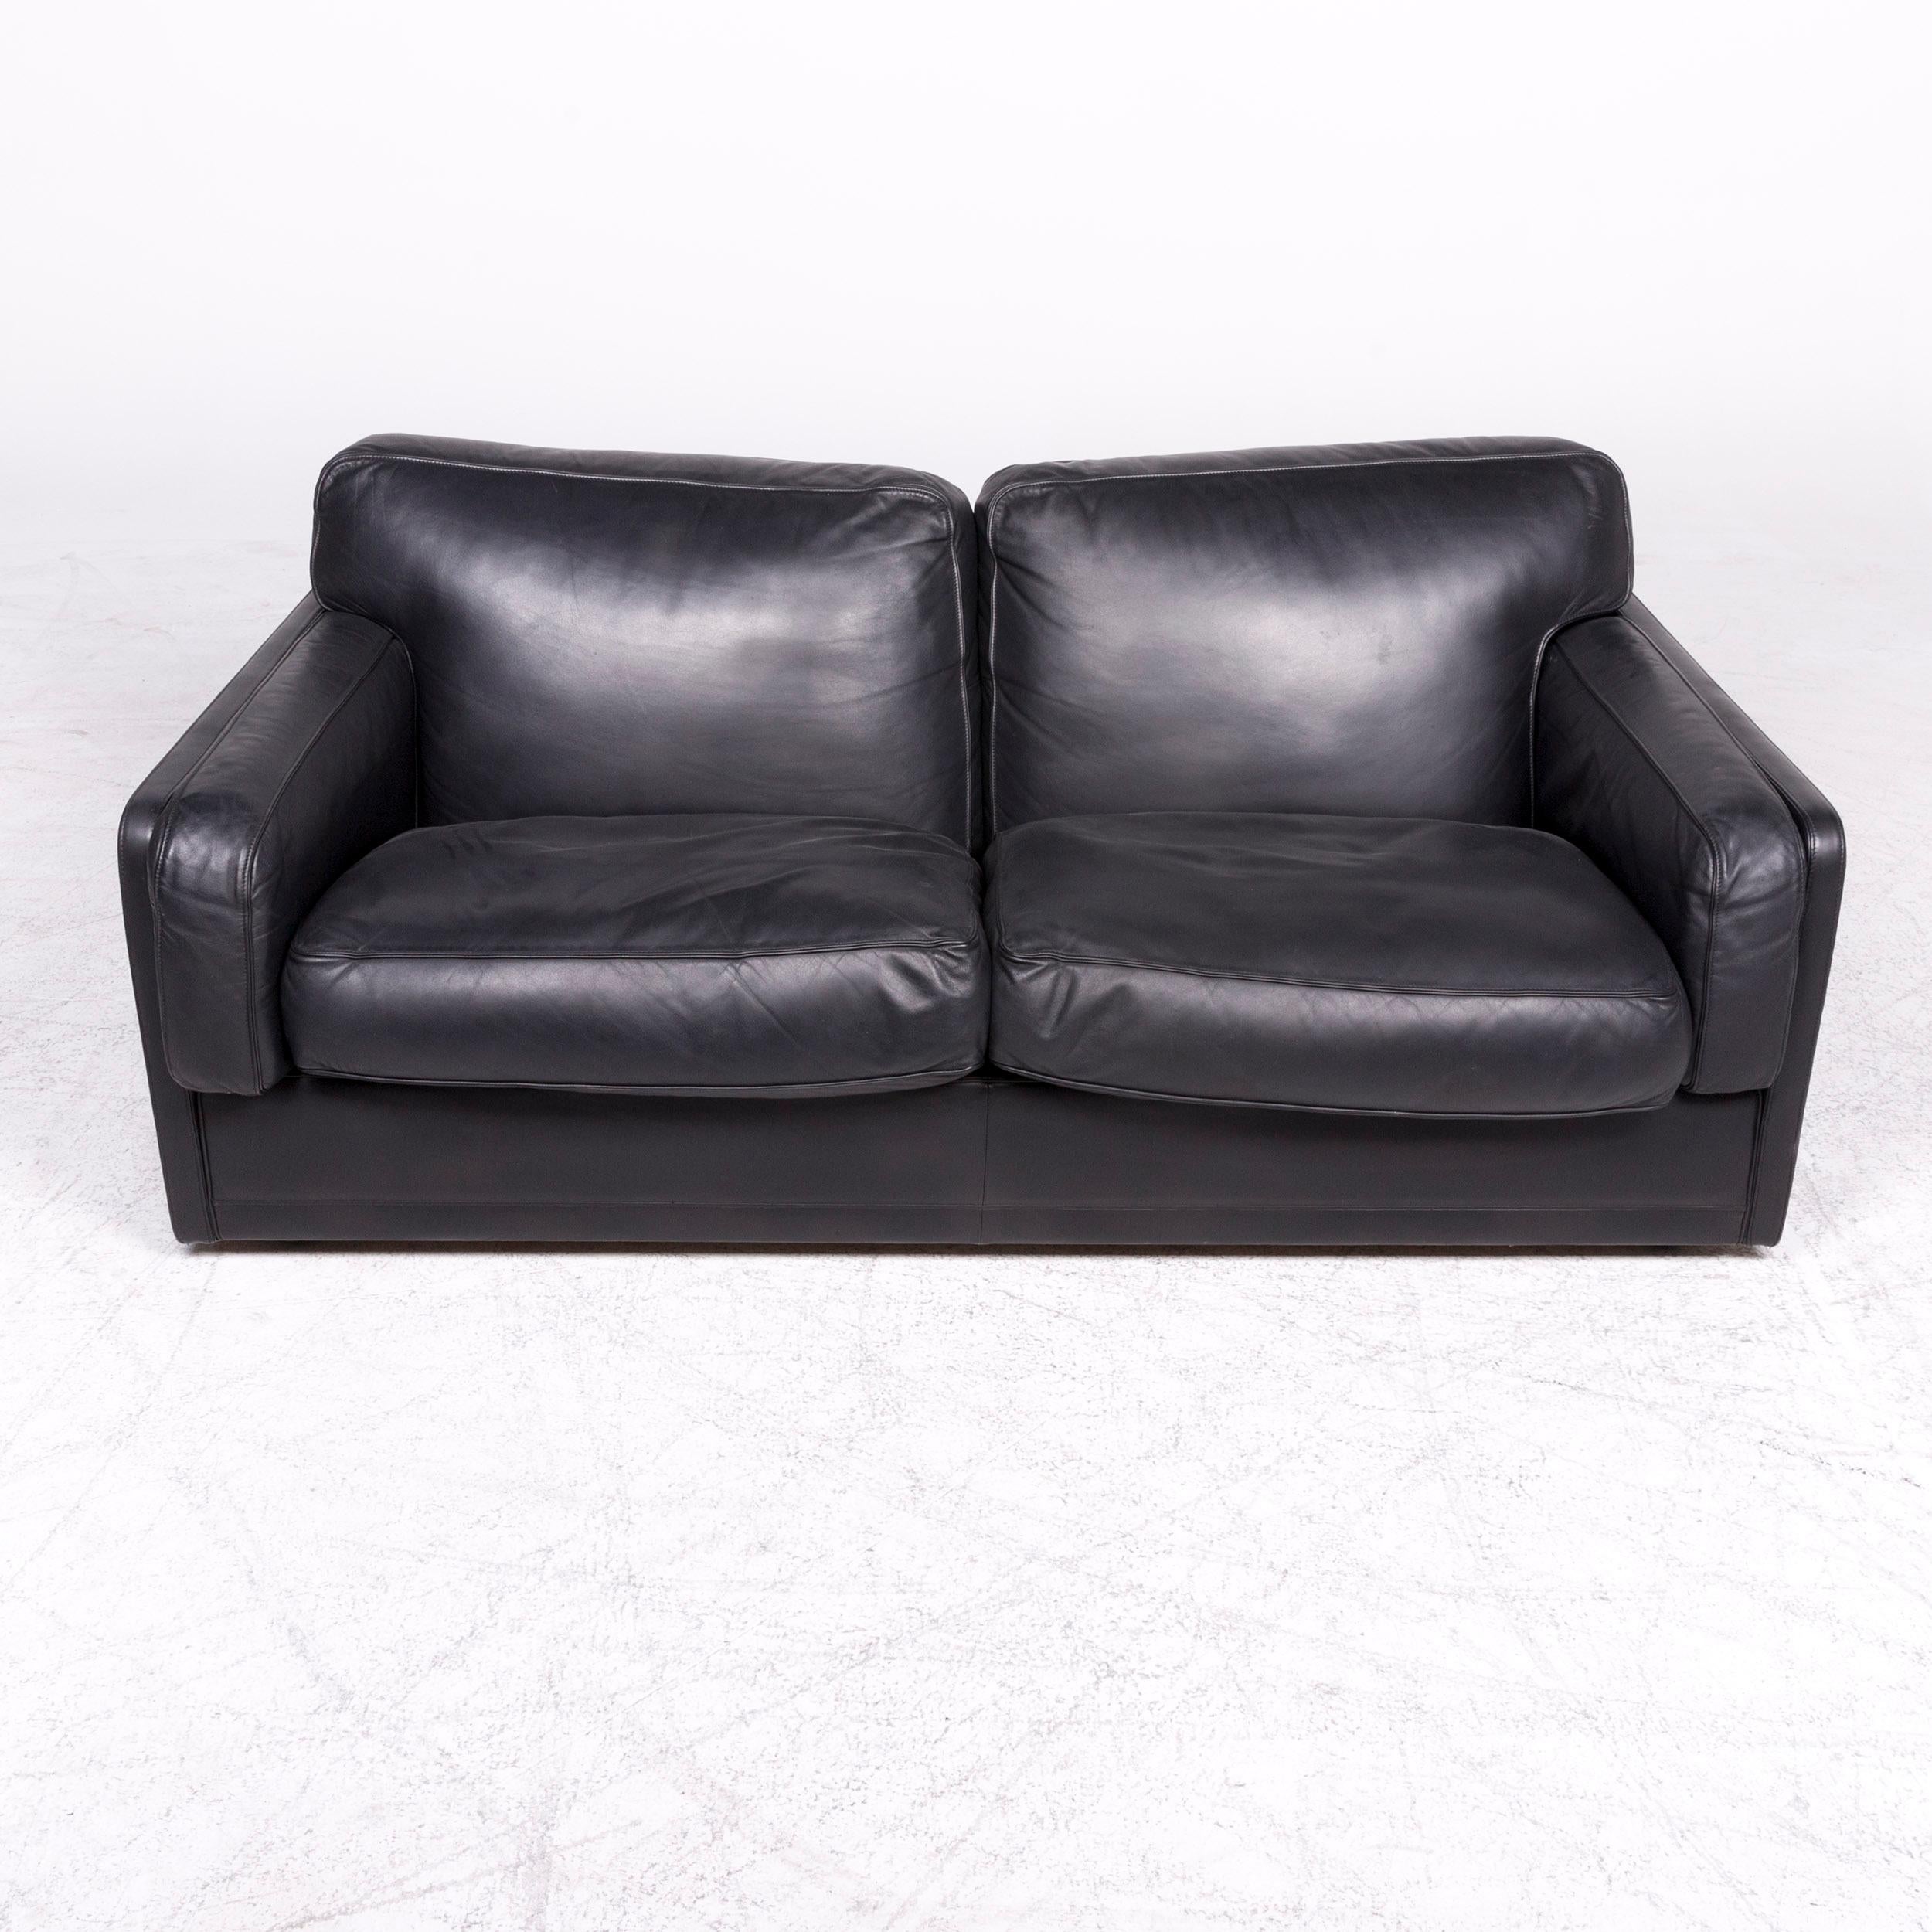 Contemporary Poltrona Frau Socrate Designer Leather Sofa Set Black Genuine Leather Two